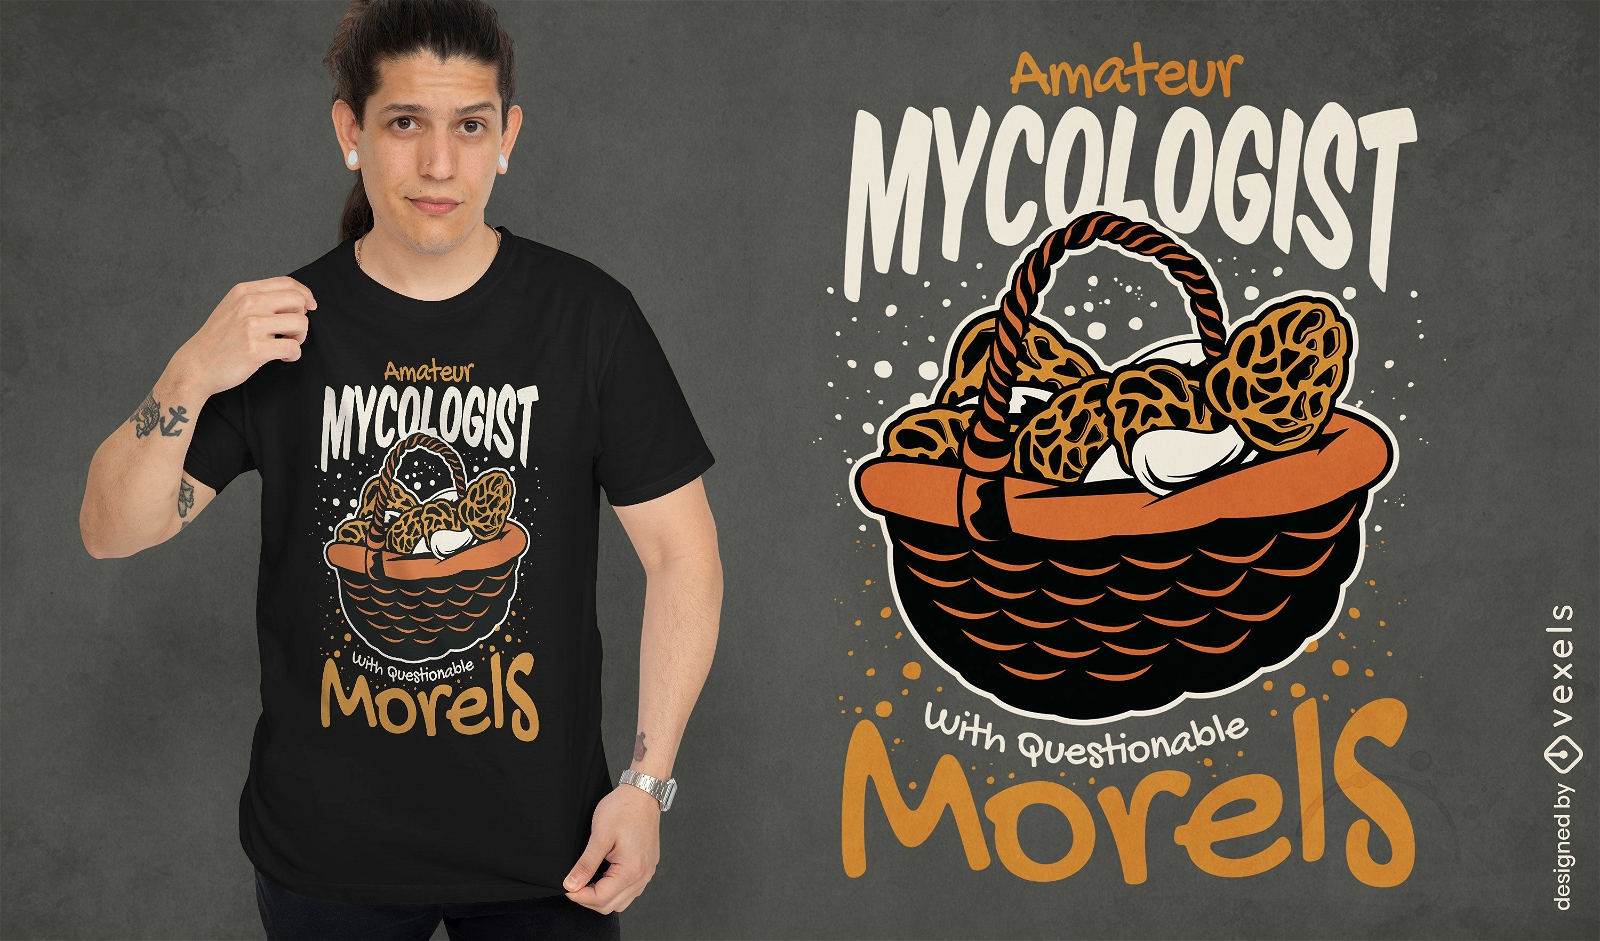 Mushroom enthusiast t-shirt design